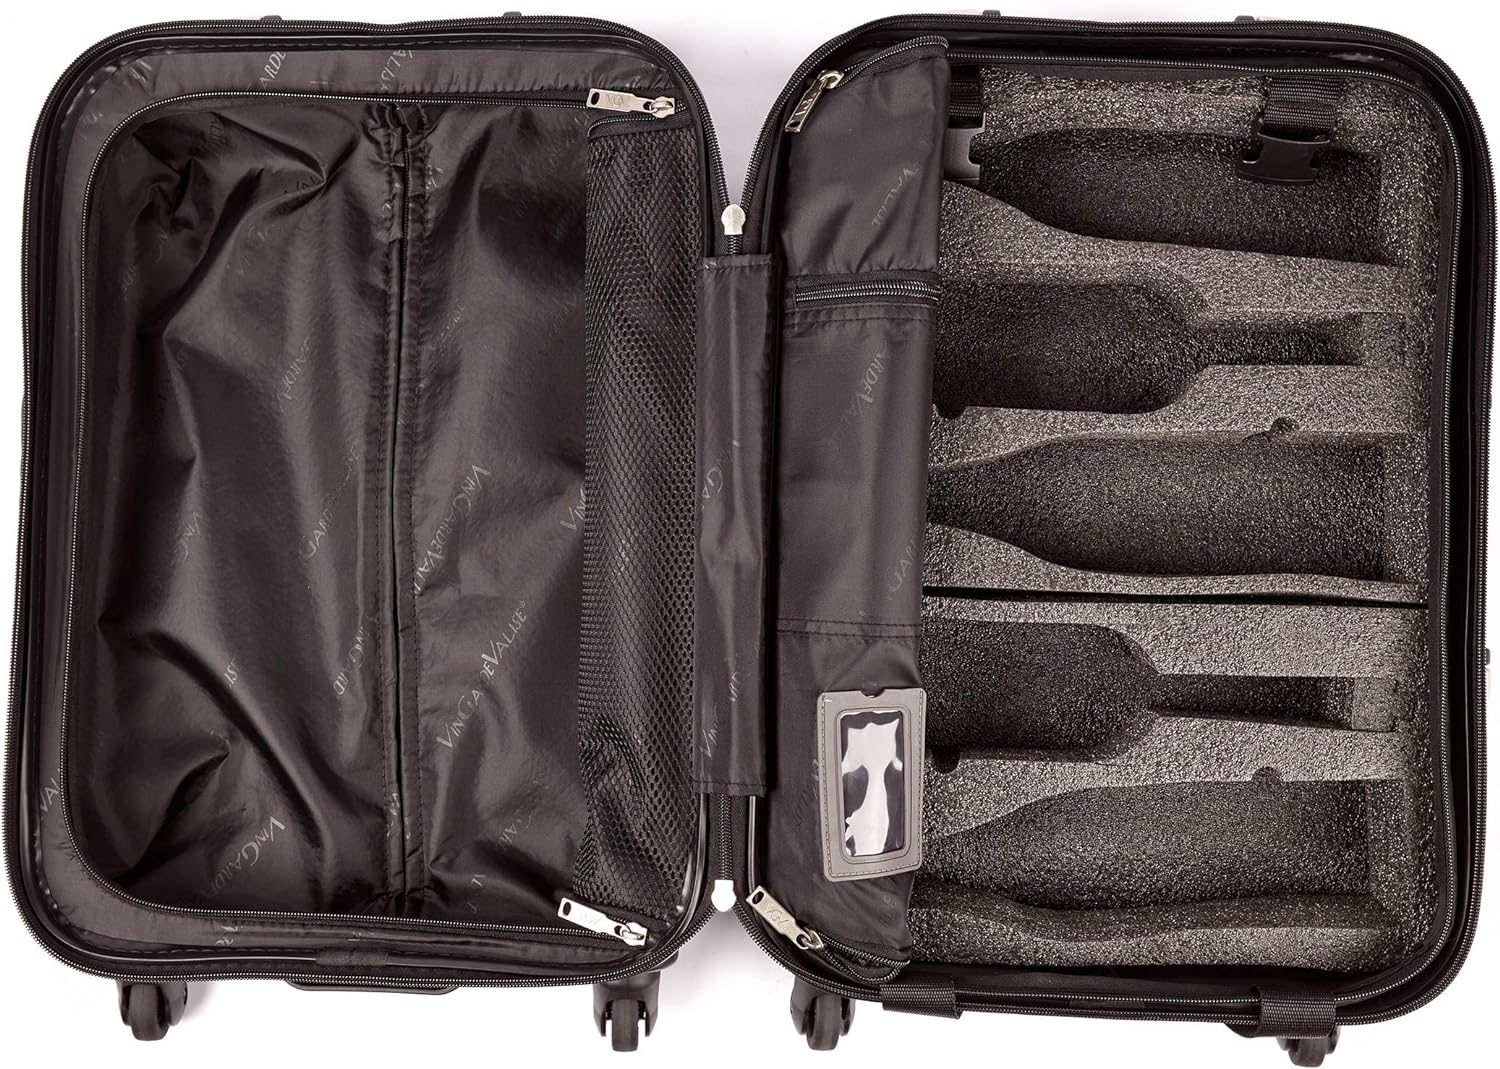 VinGardeValise Universal Travel Wine Suitcase for 5 Wine Bottles